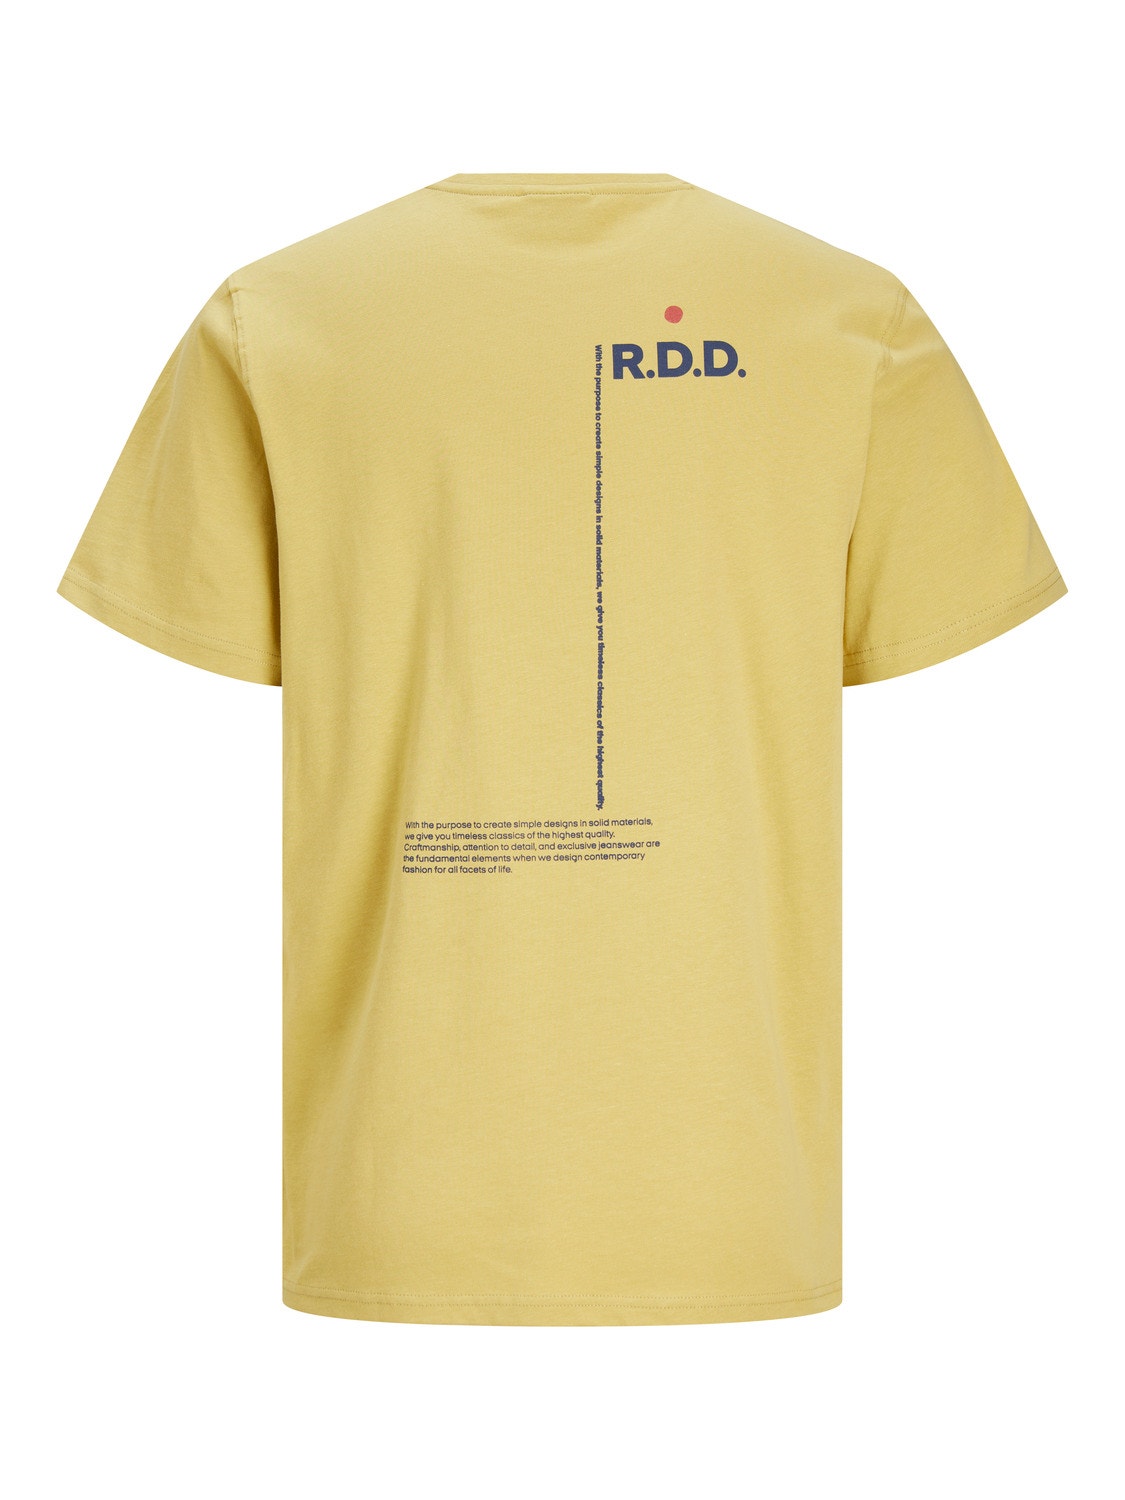 Jack & Jones RDD Καλοκαιρινό μπλουζάκι -Antique Gold - 12252153